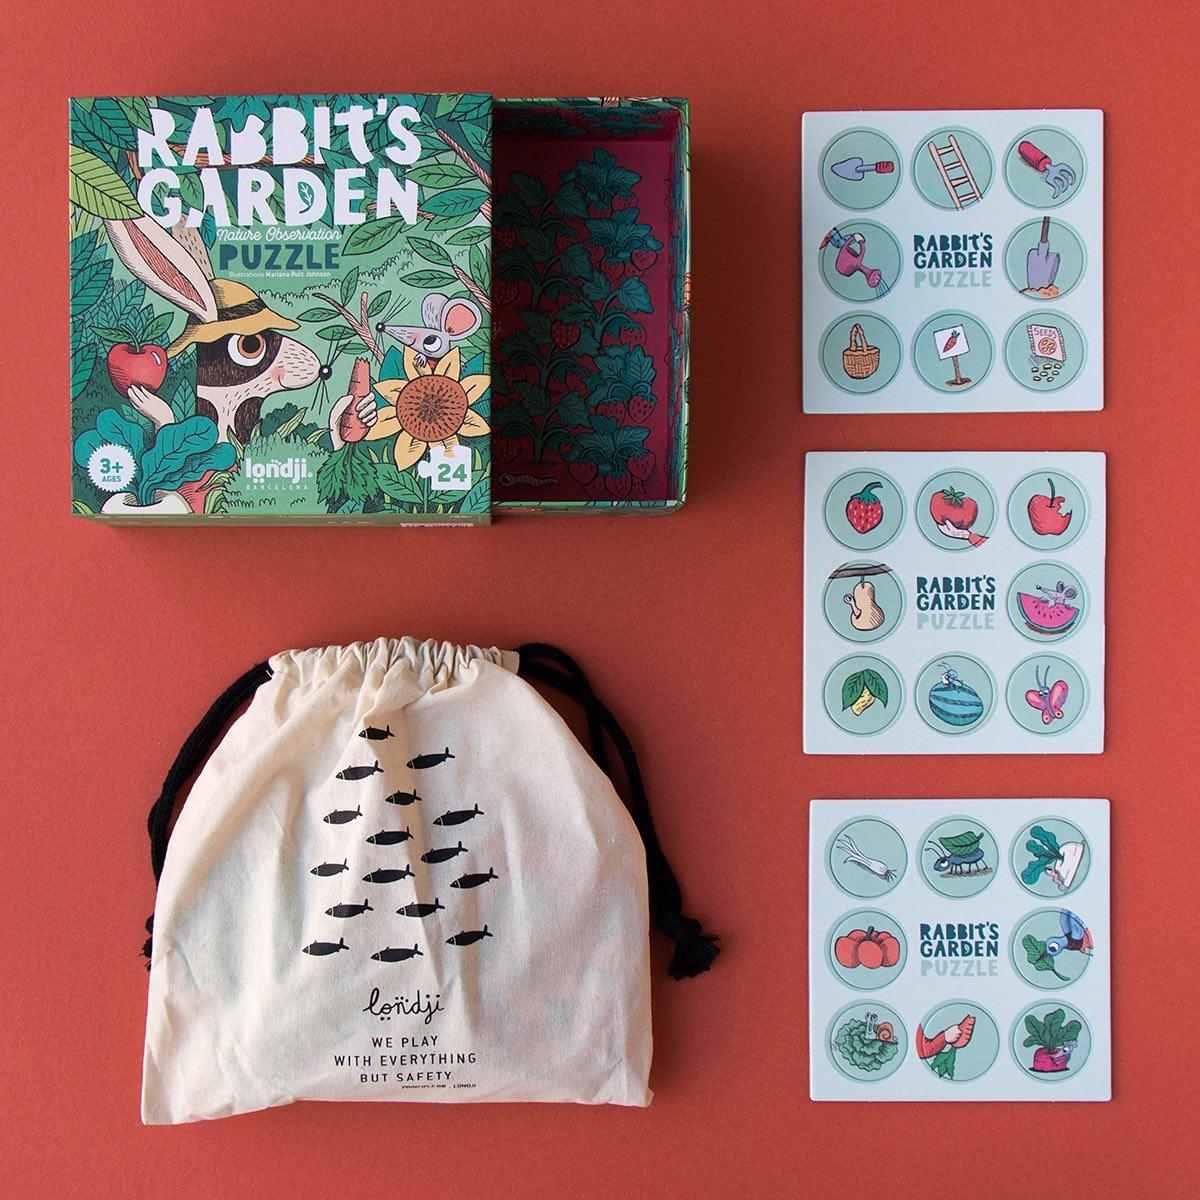 Londji: Rabbit's Garden bunny puzzle and memo